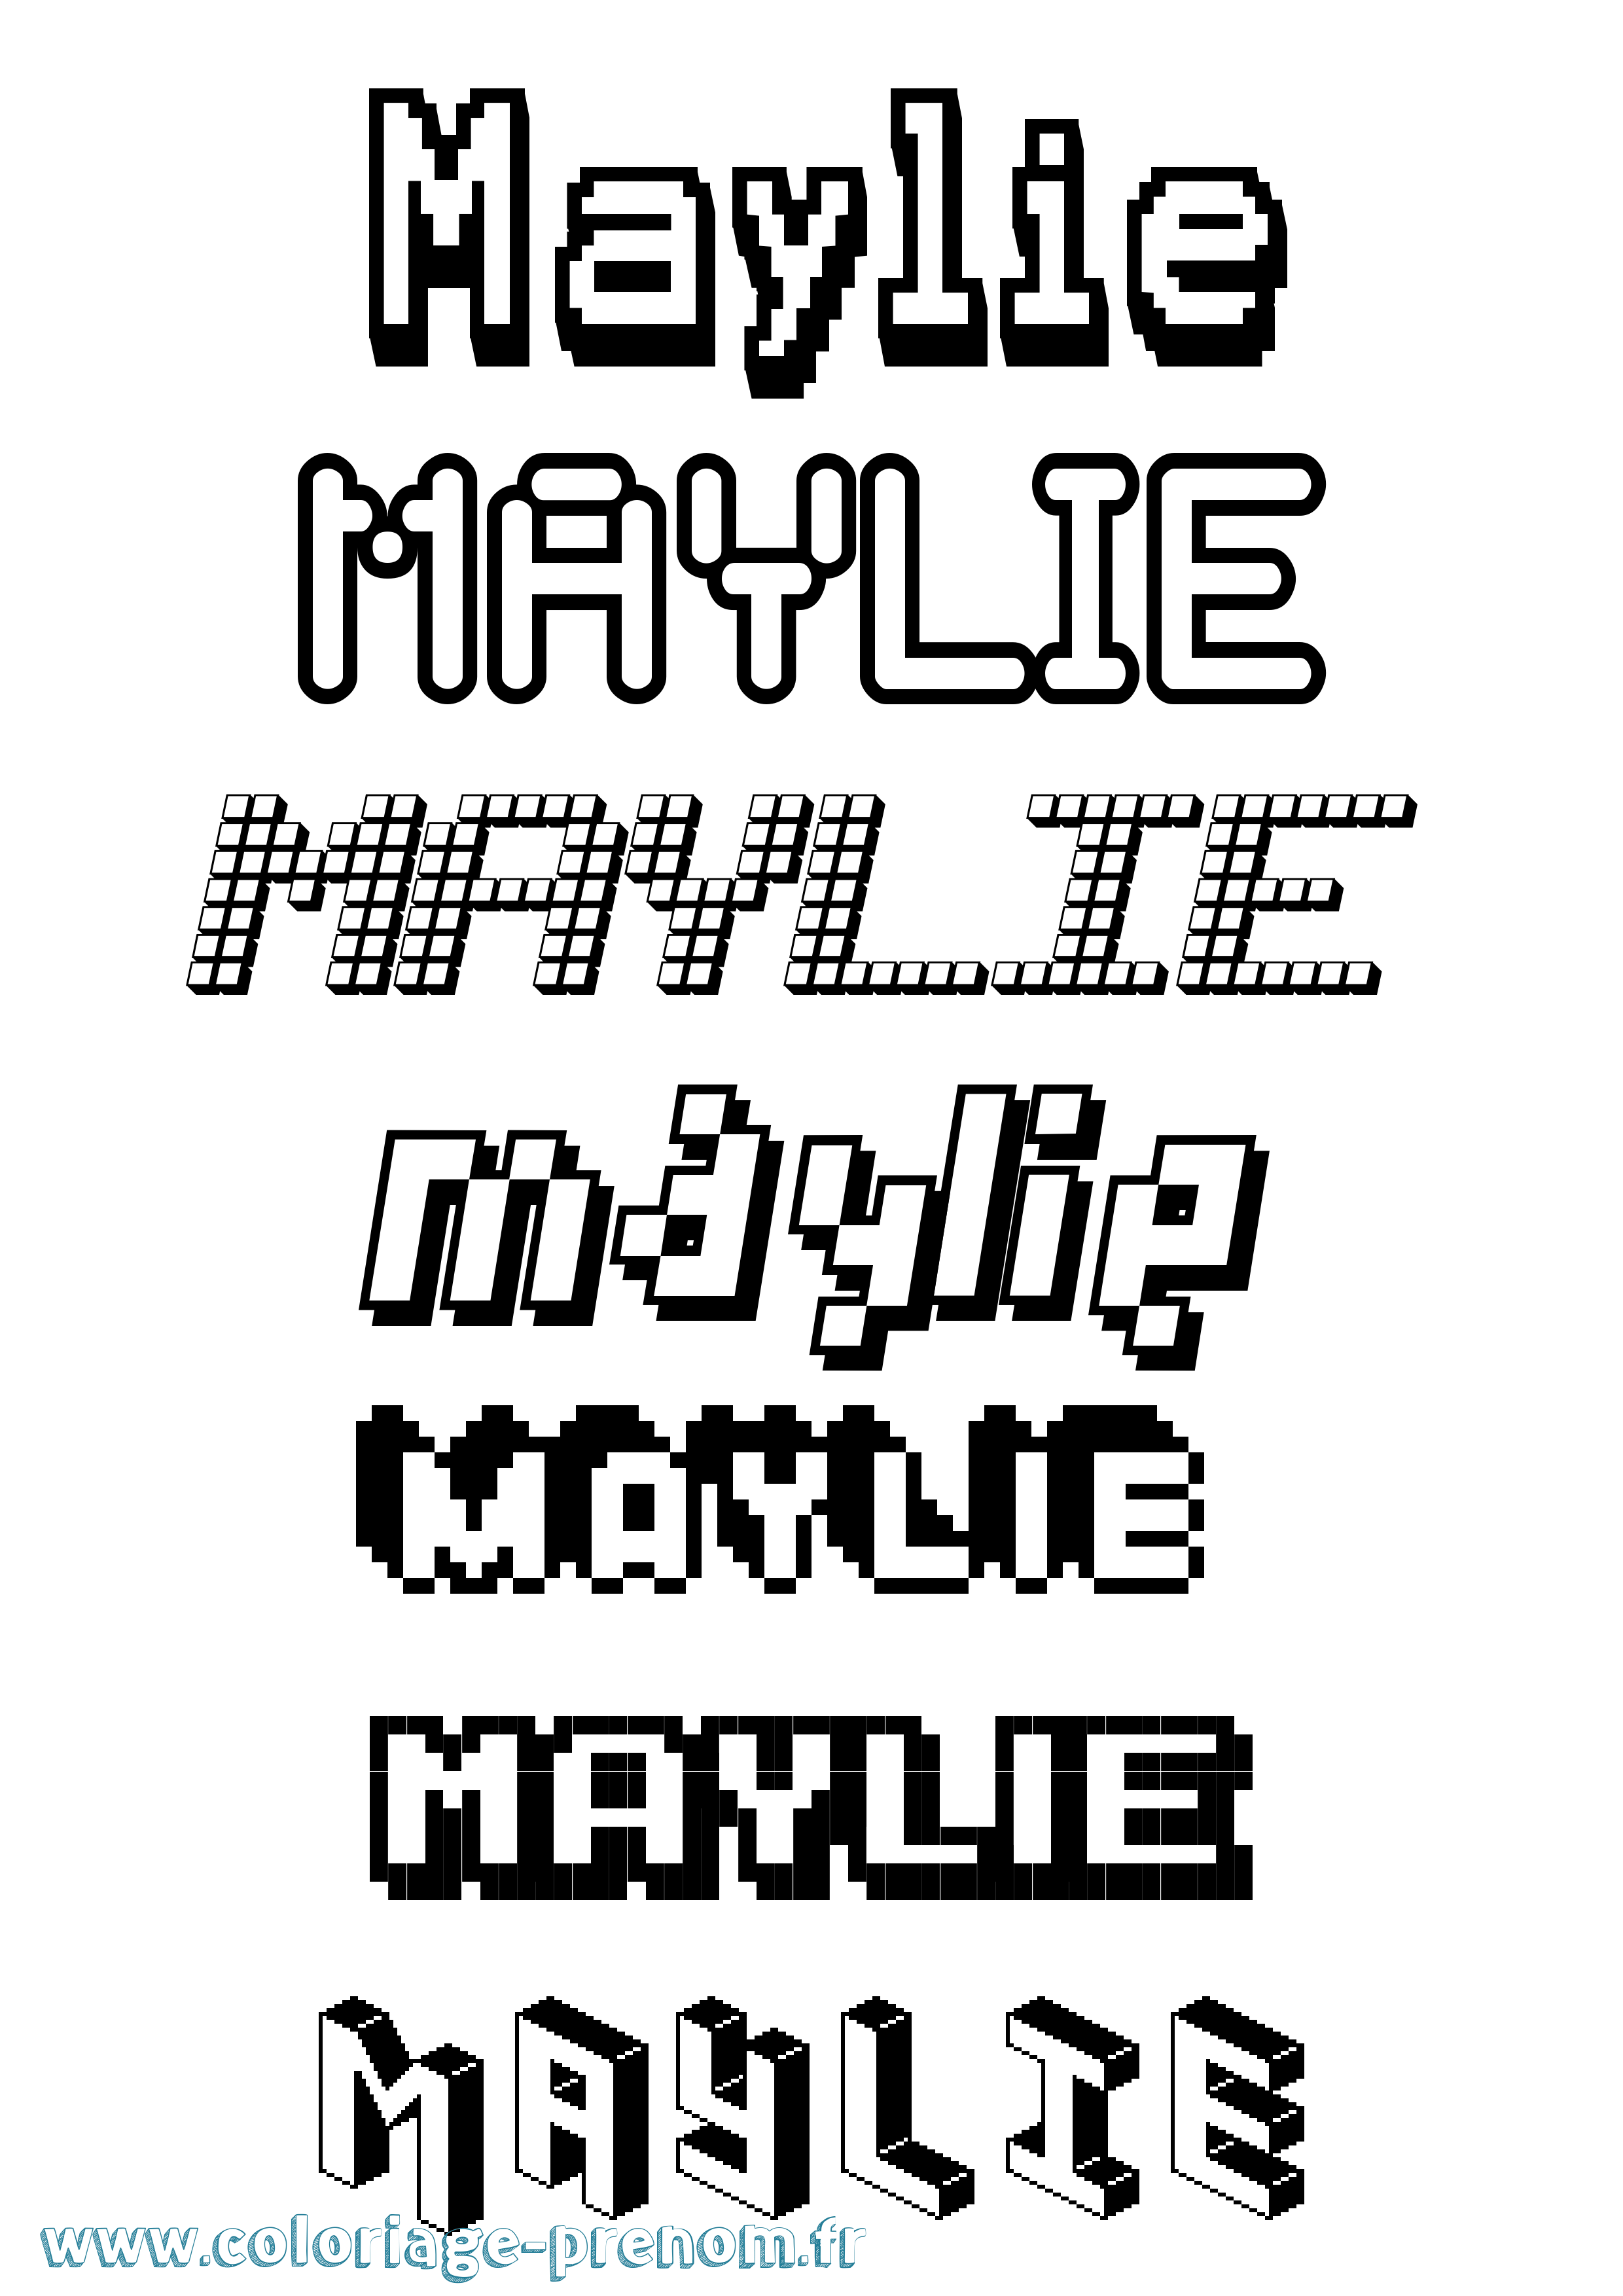 Coloriage prénom Maylie Pixel